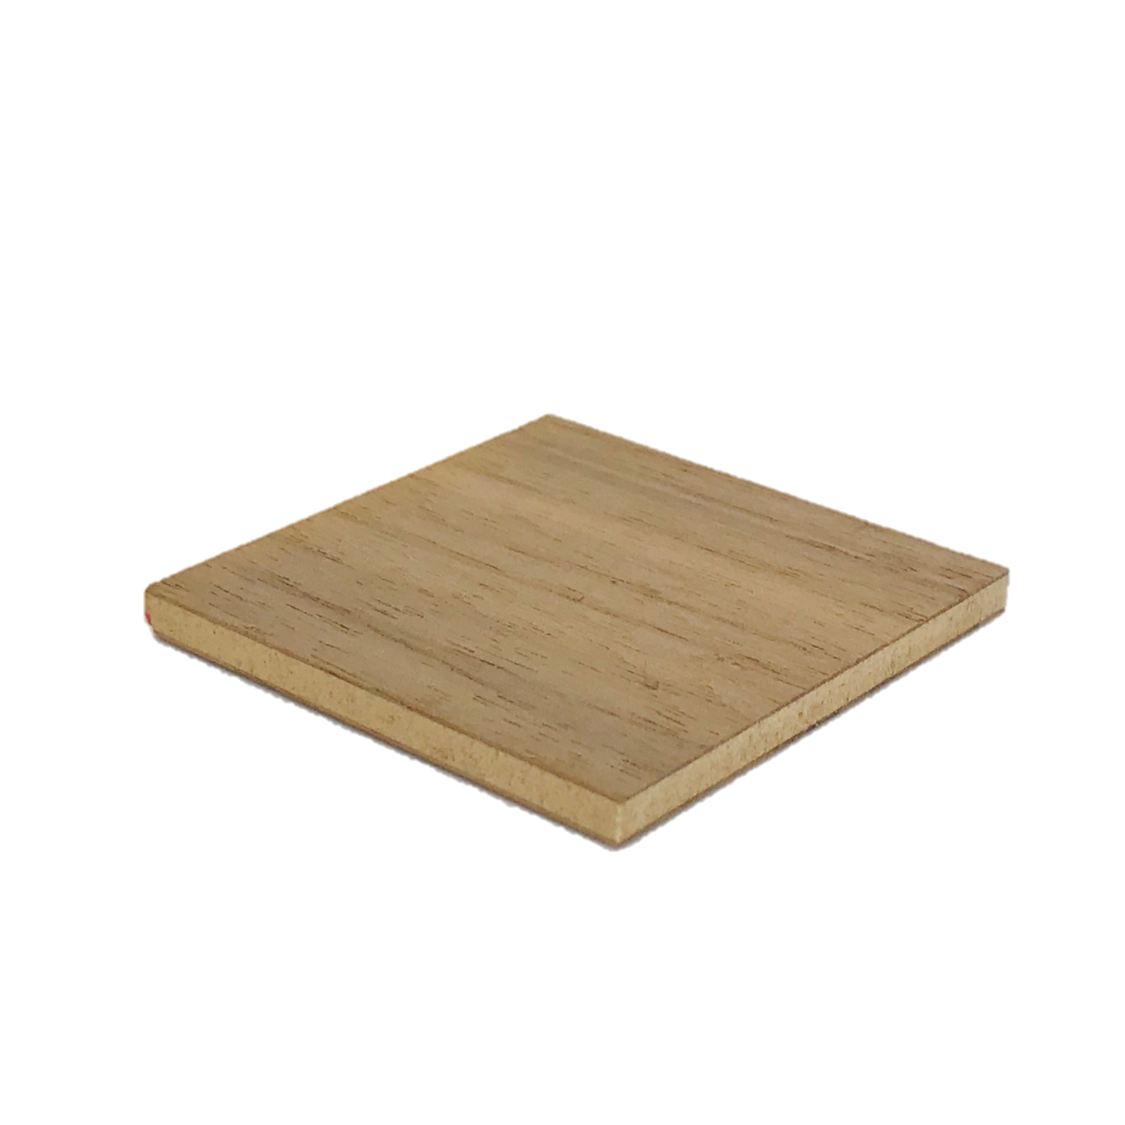 Walnut Wood Sheet Plank Thin 1/32 x 3 x 12 long Veneer Woodworking Laser  - Miniature